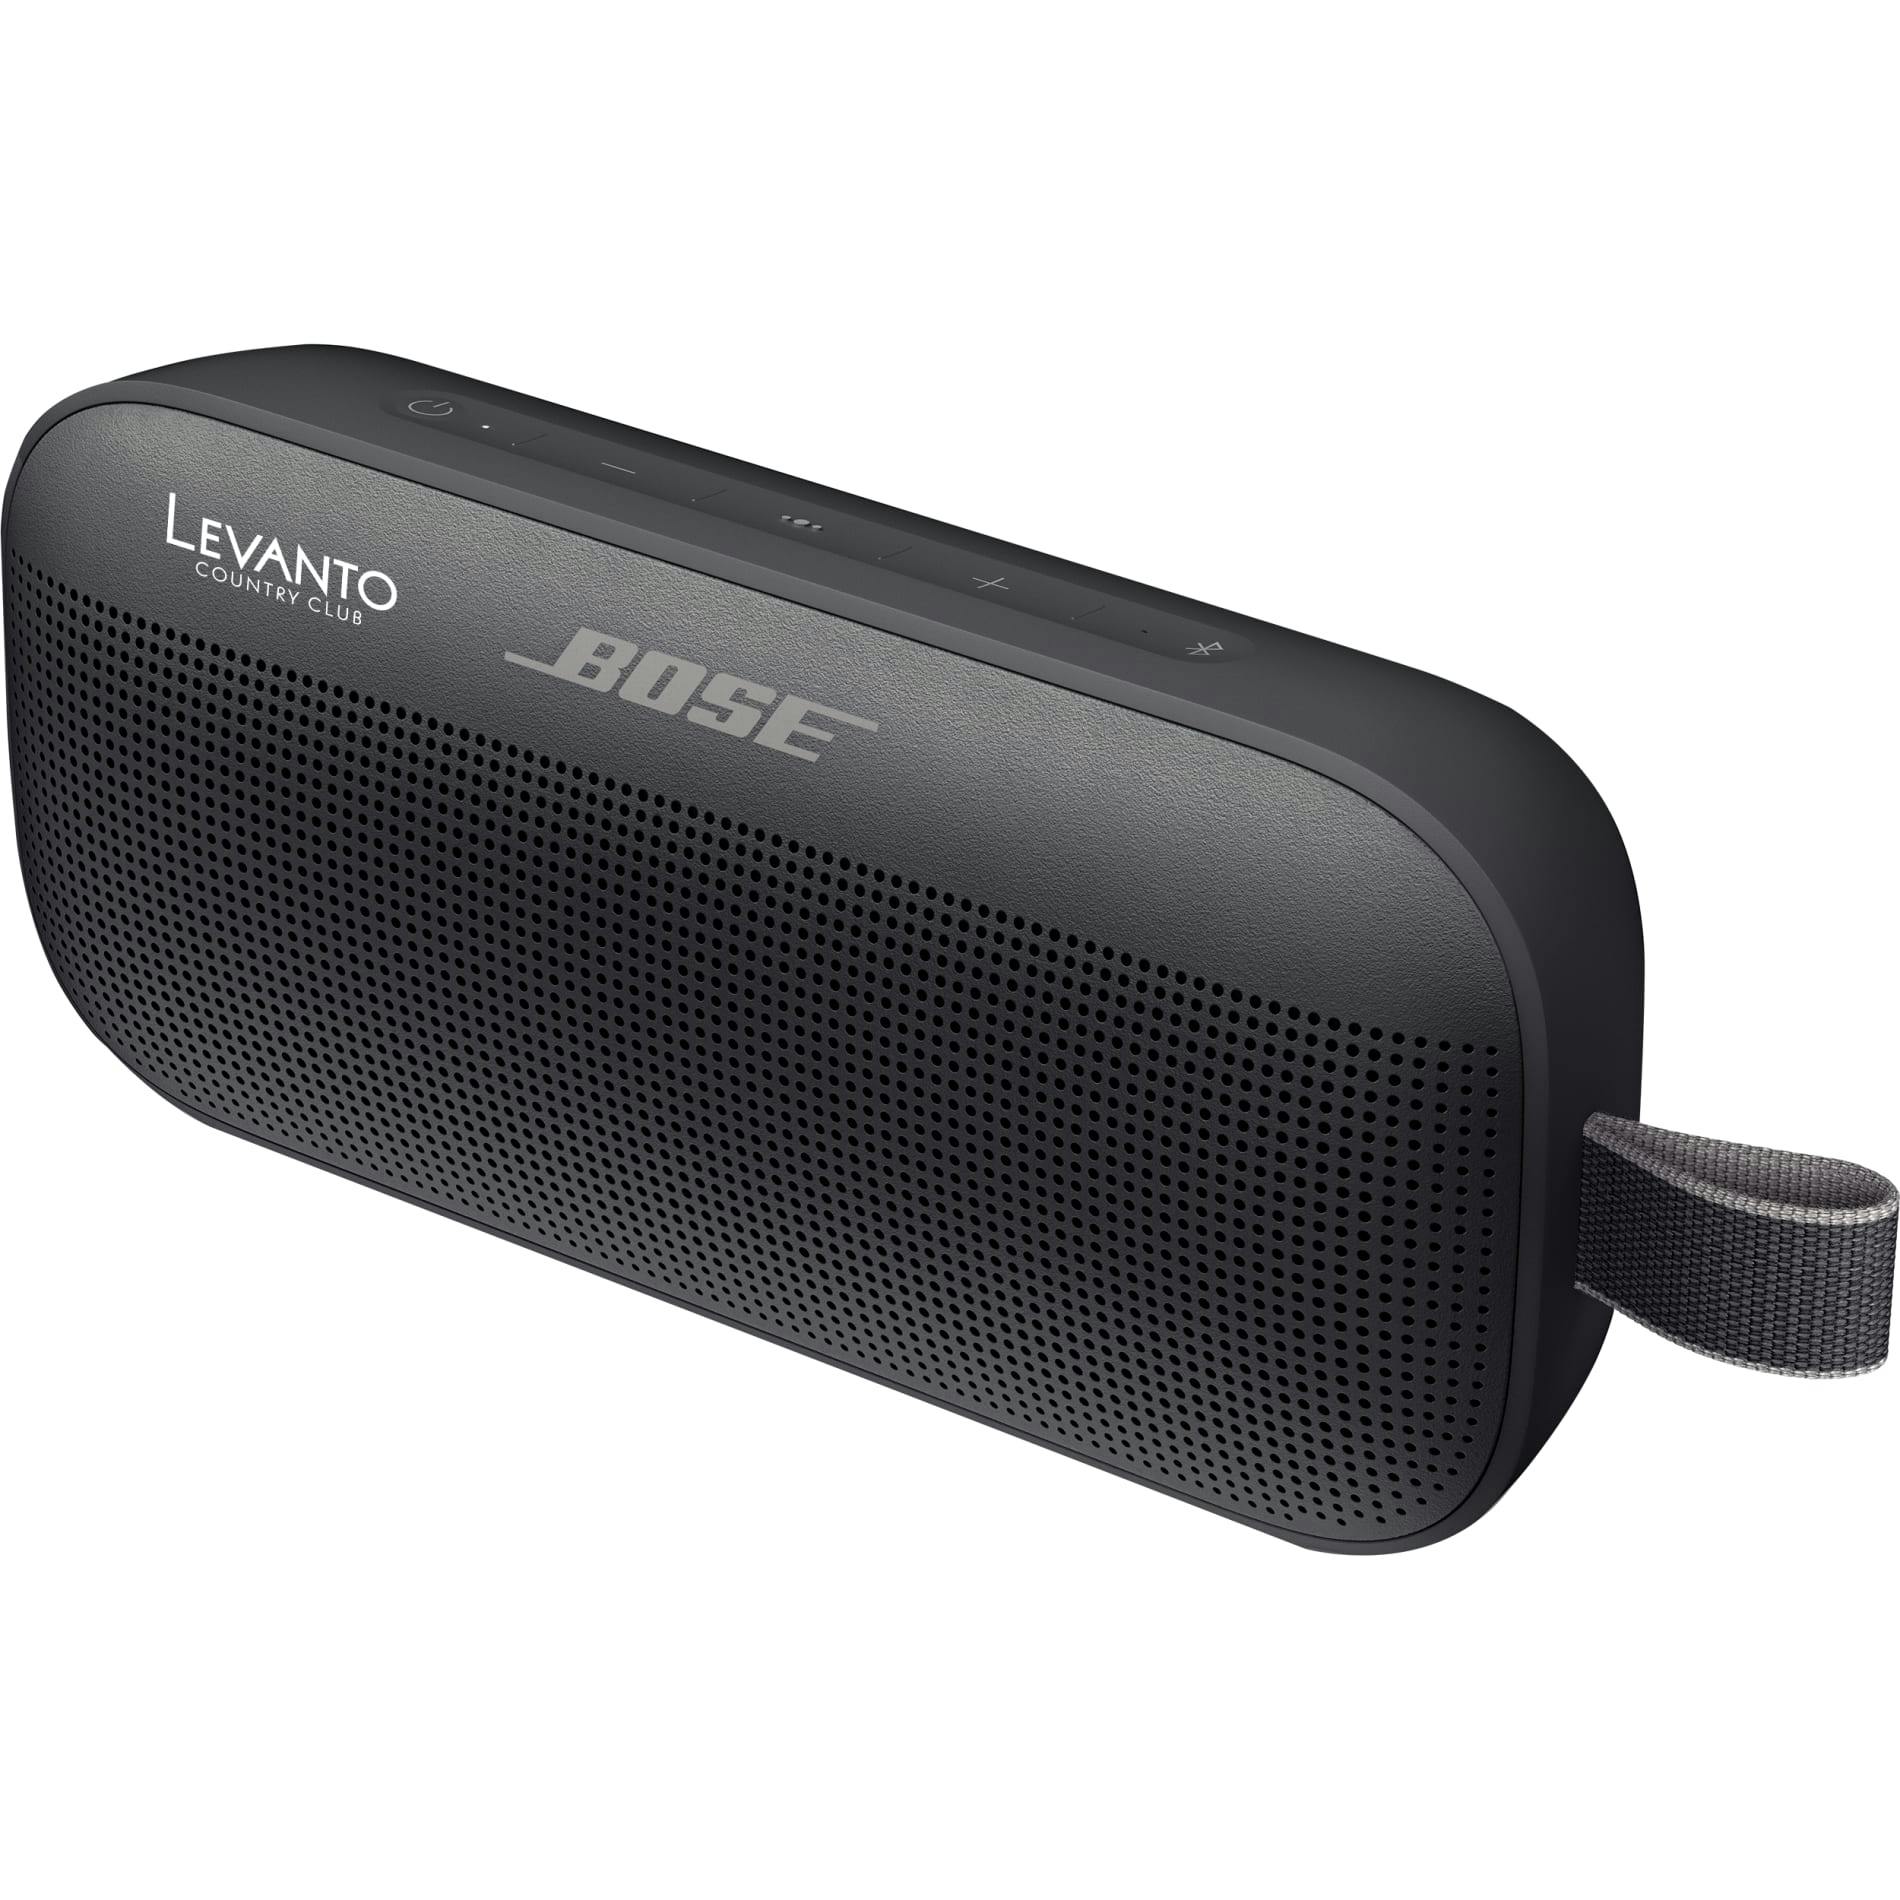 Bose Flex Bluetooth Speaker - additional Image 3